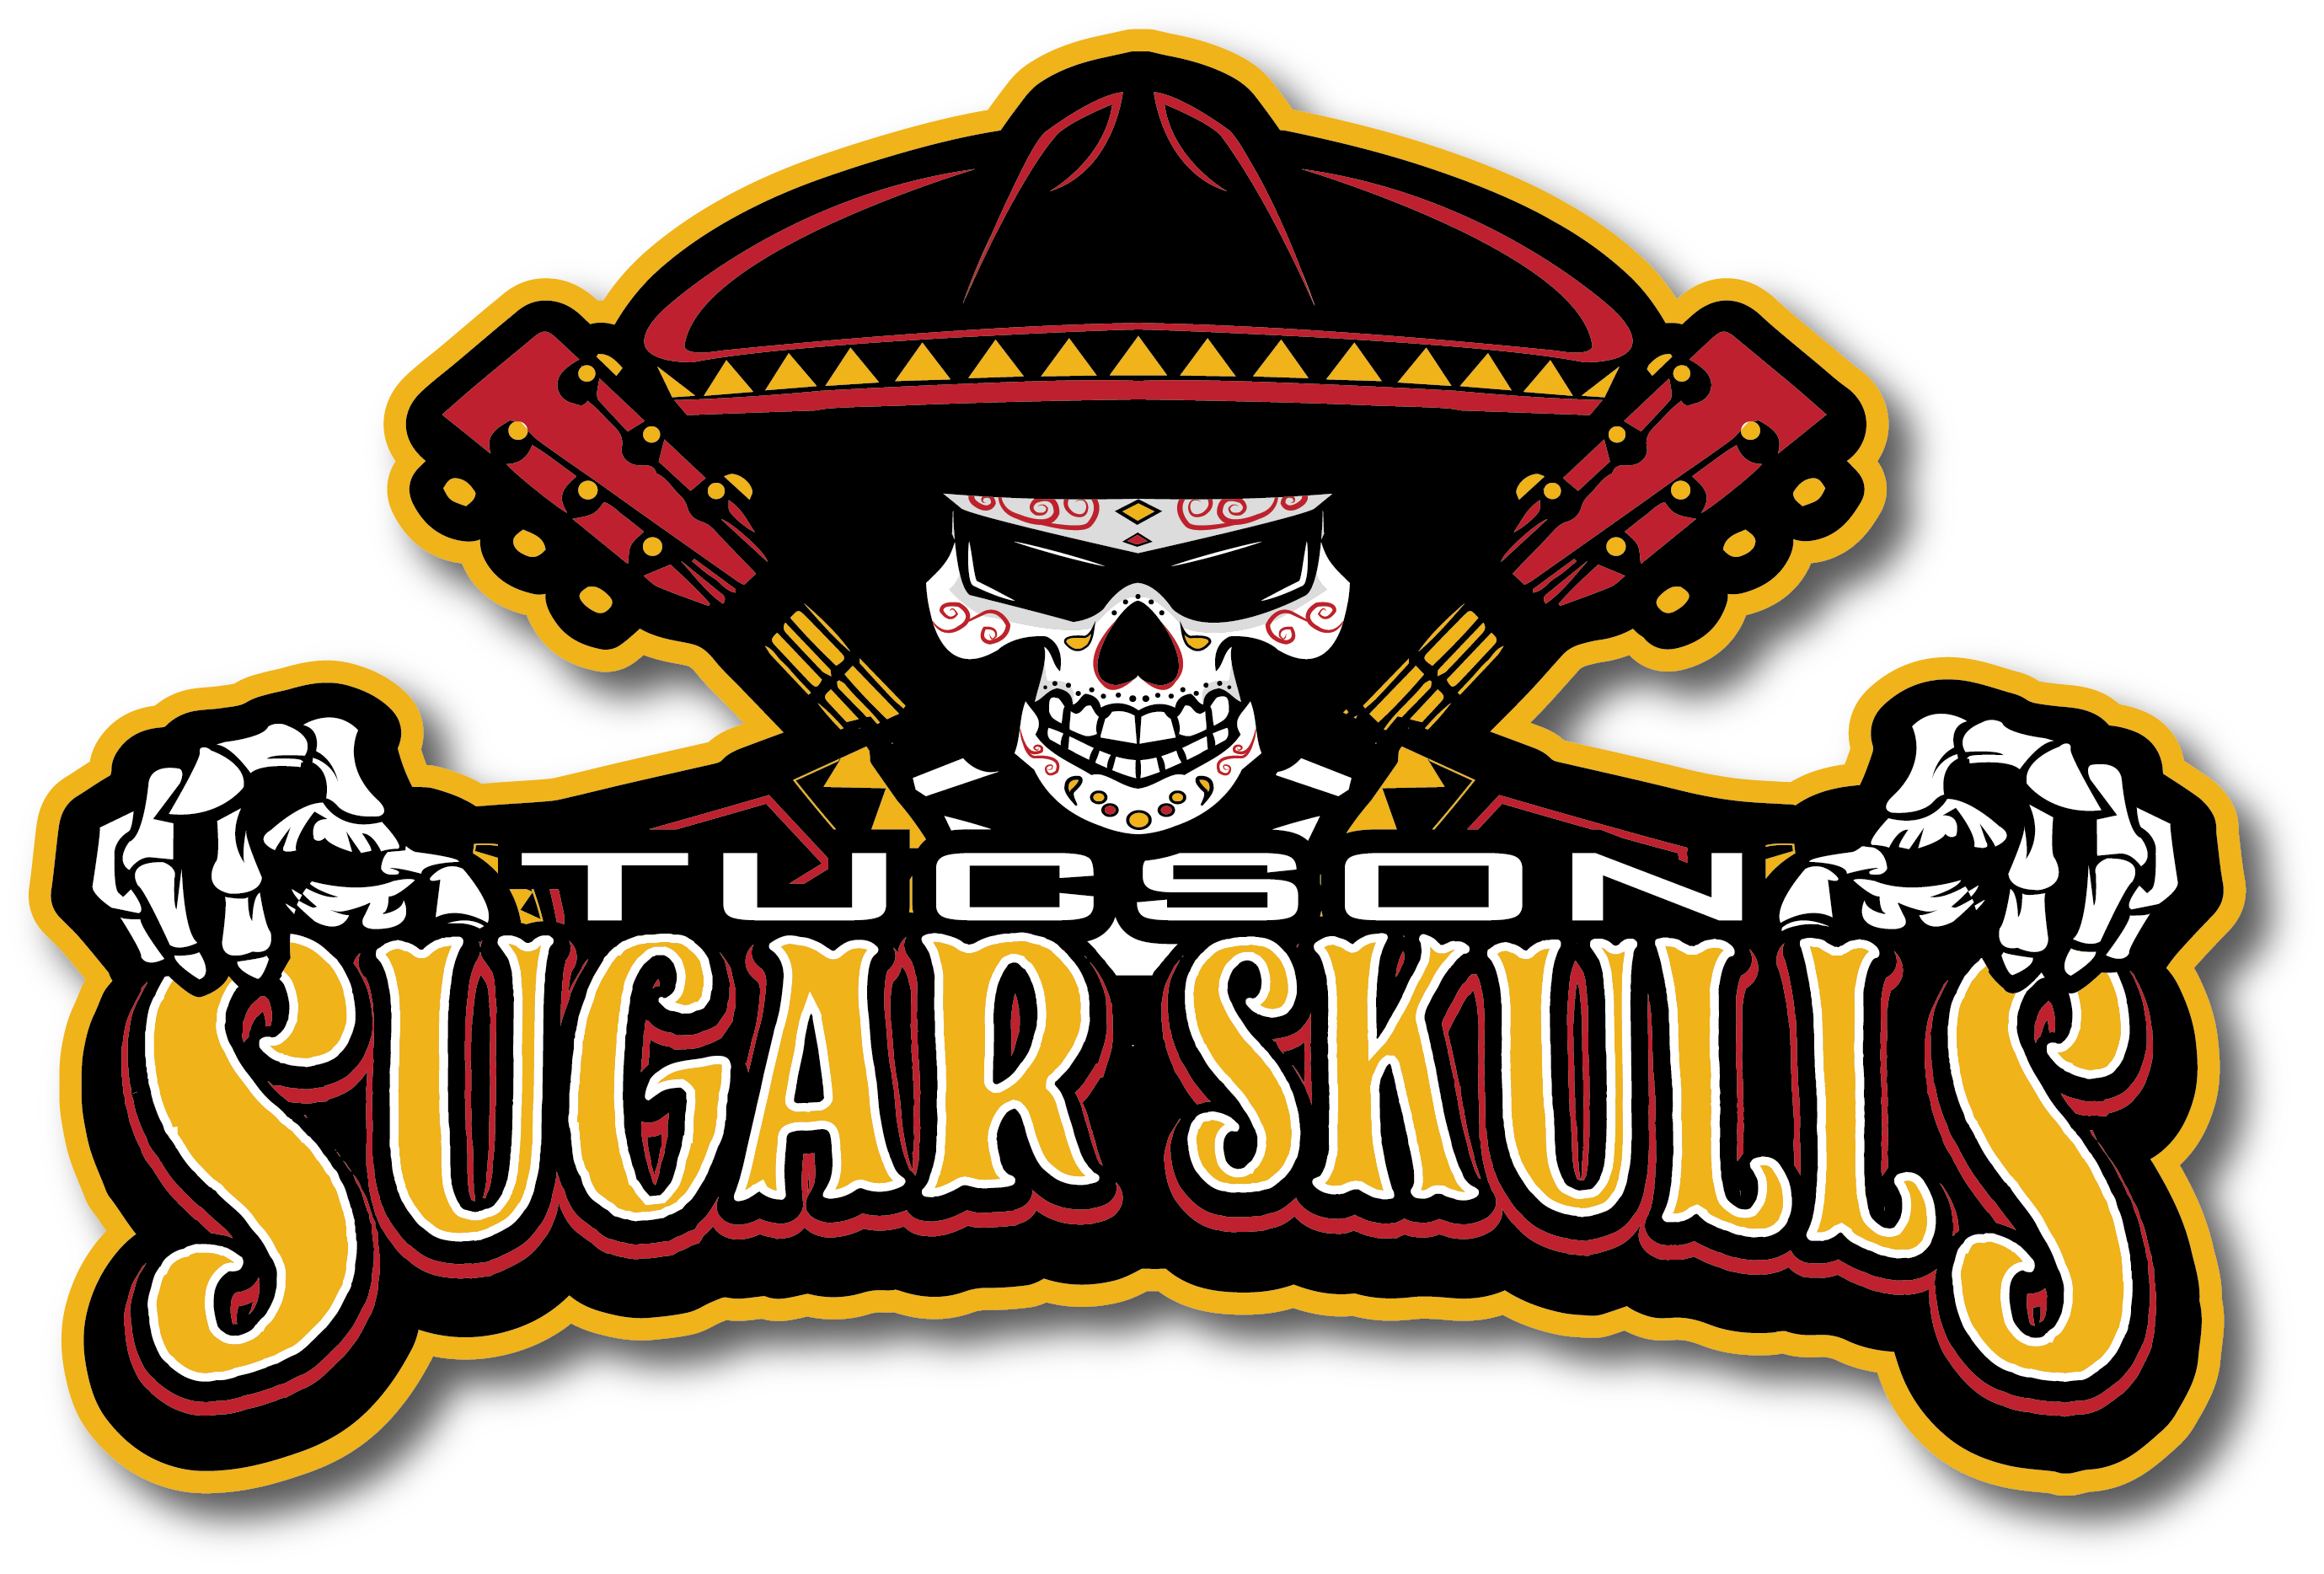 Tucson Sugar Skulls Tucson Attractions